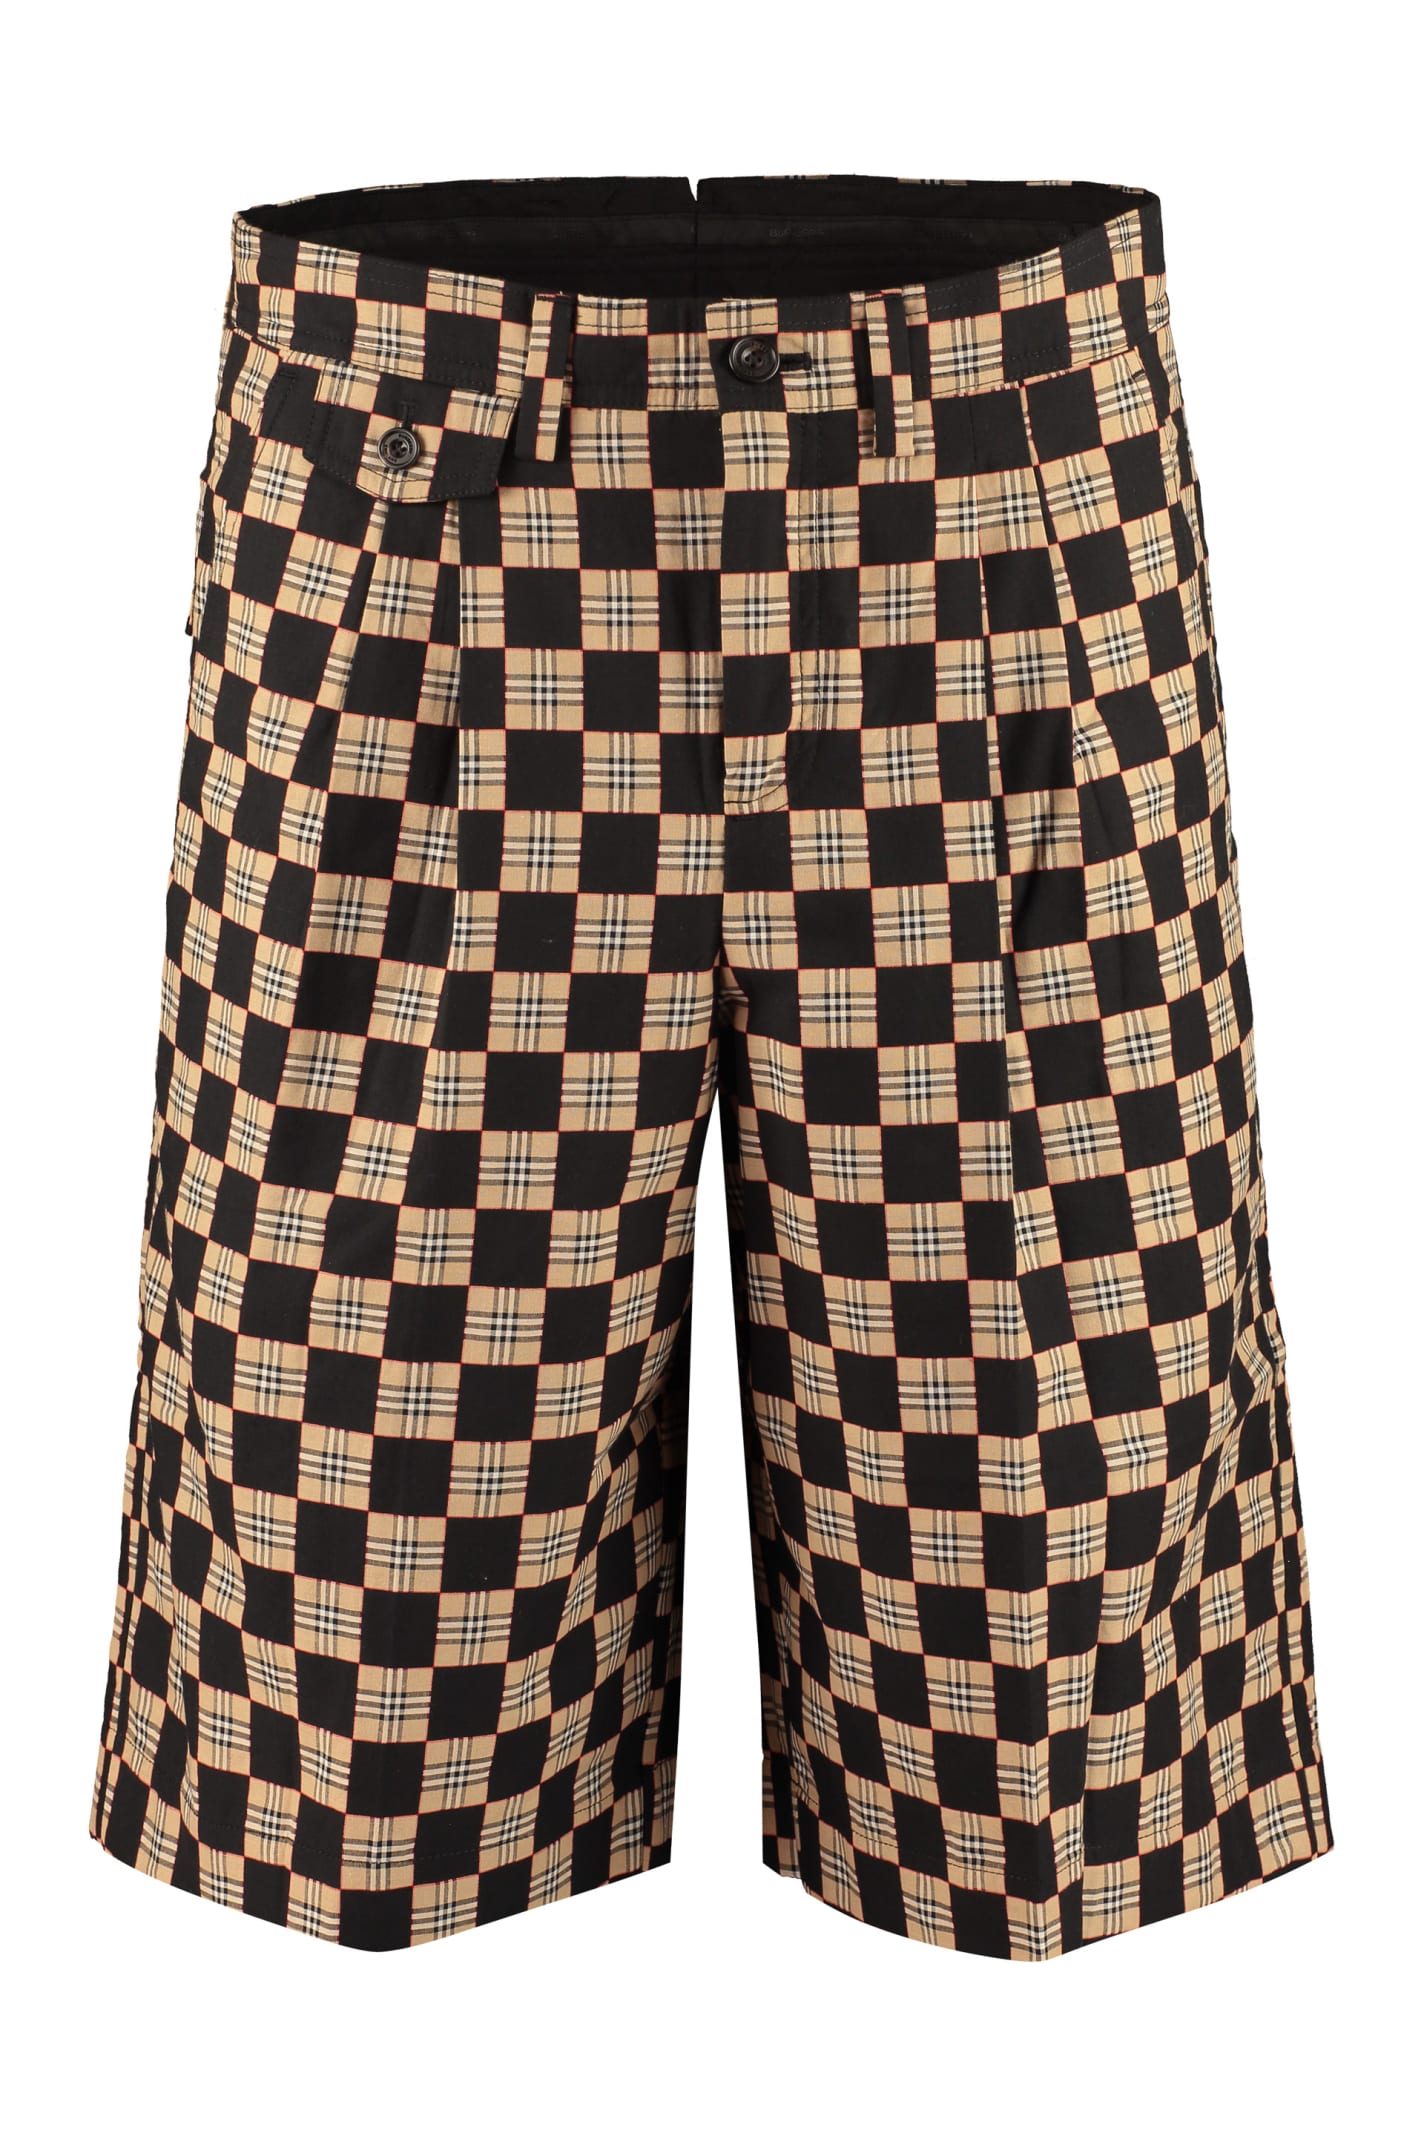 Burberry Jacquard Cotton Bermuda Shorts